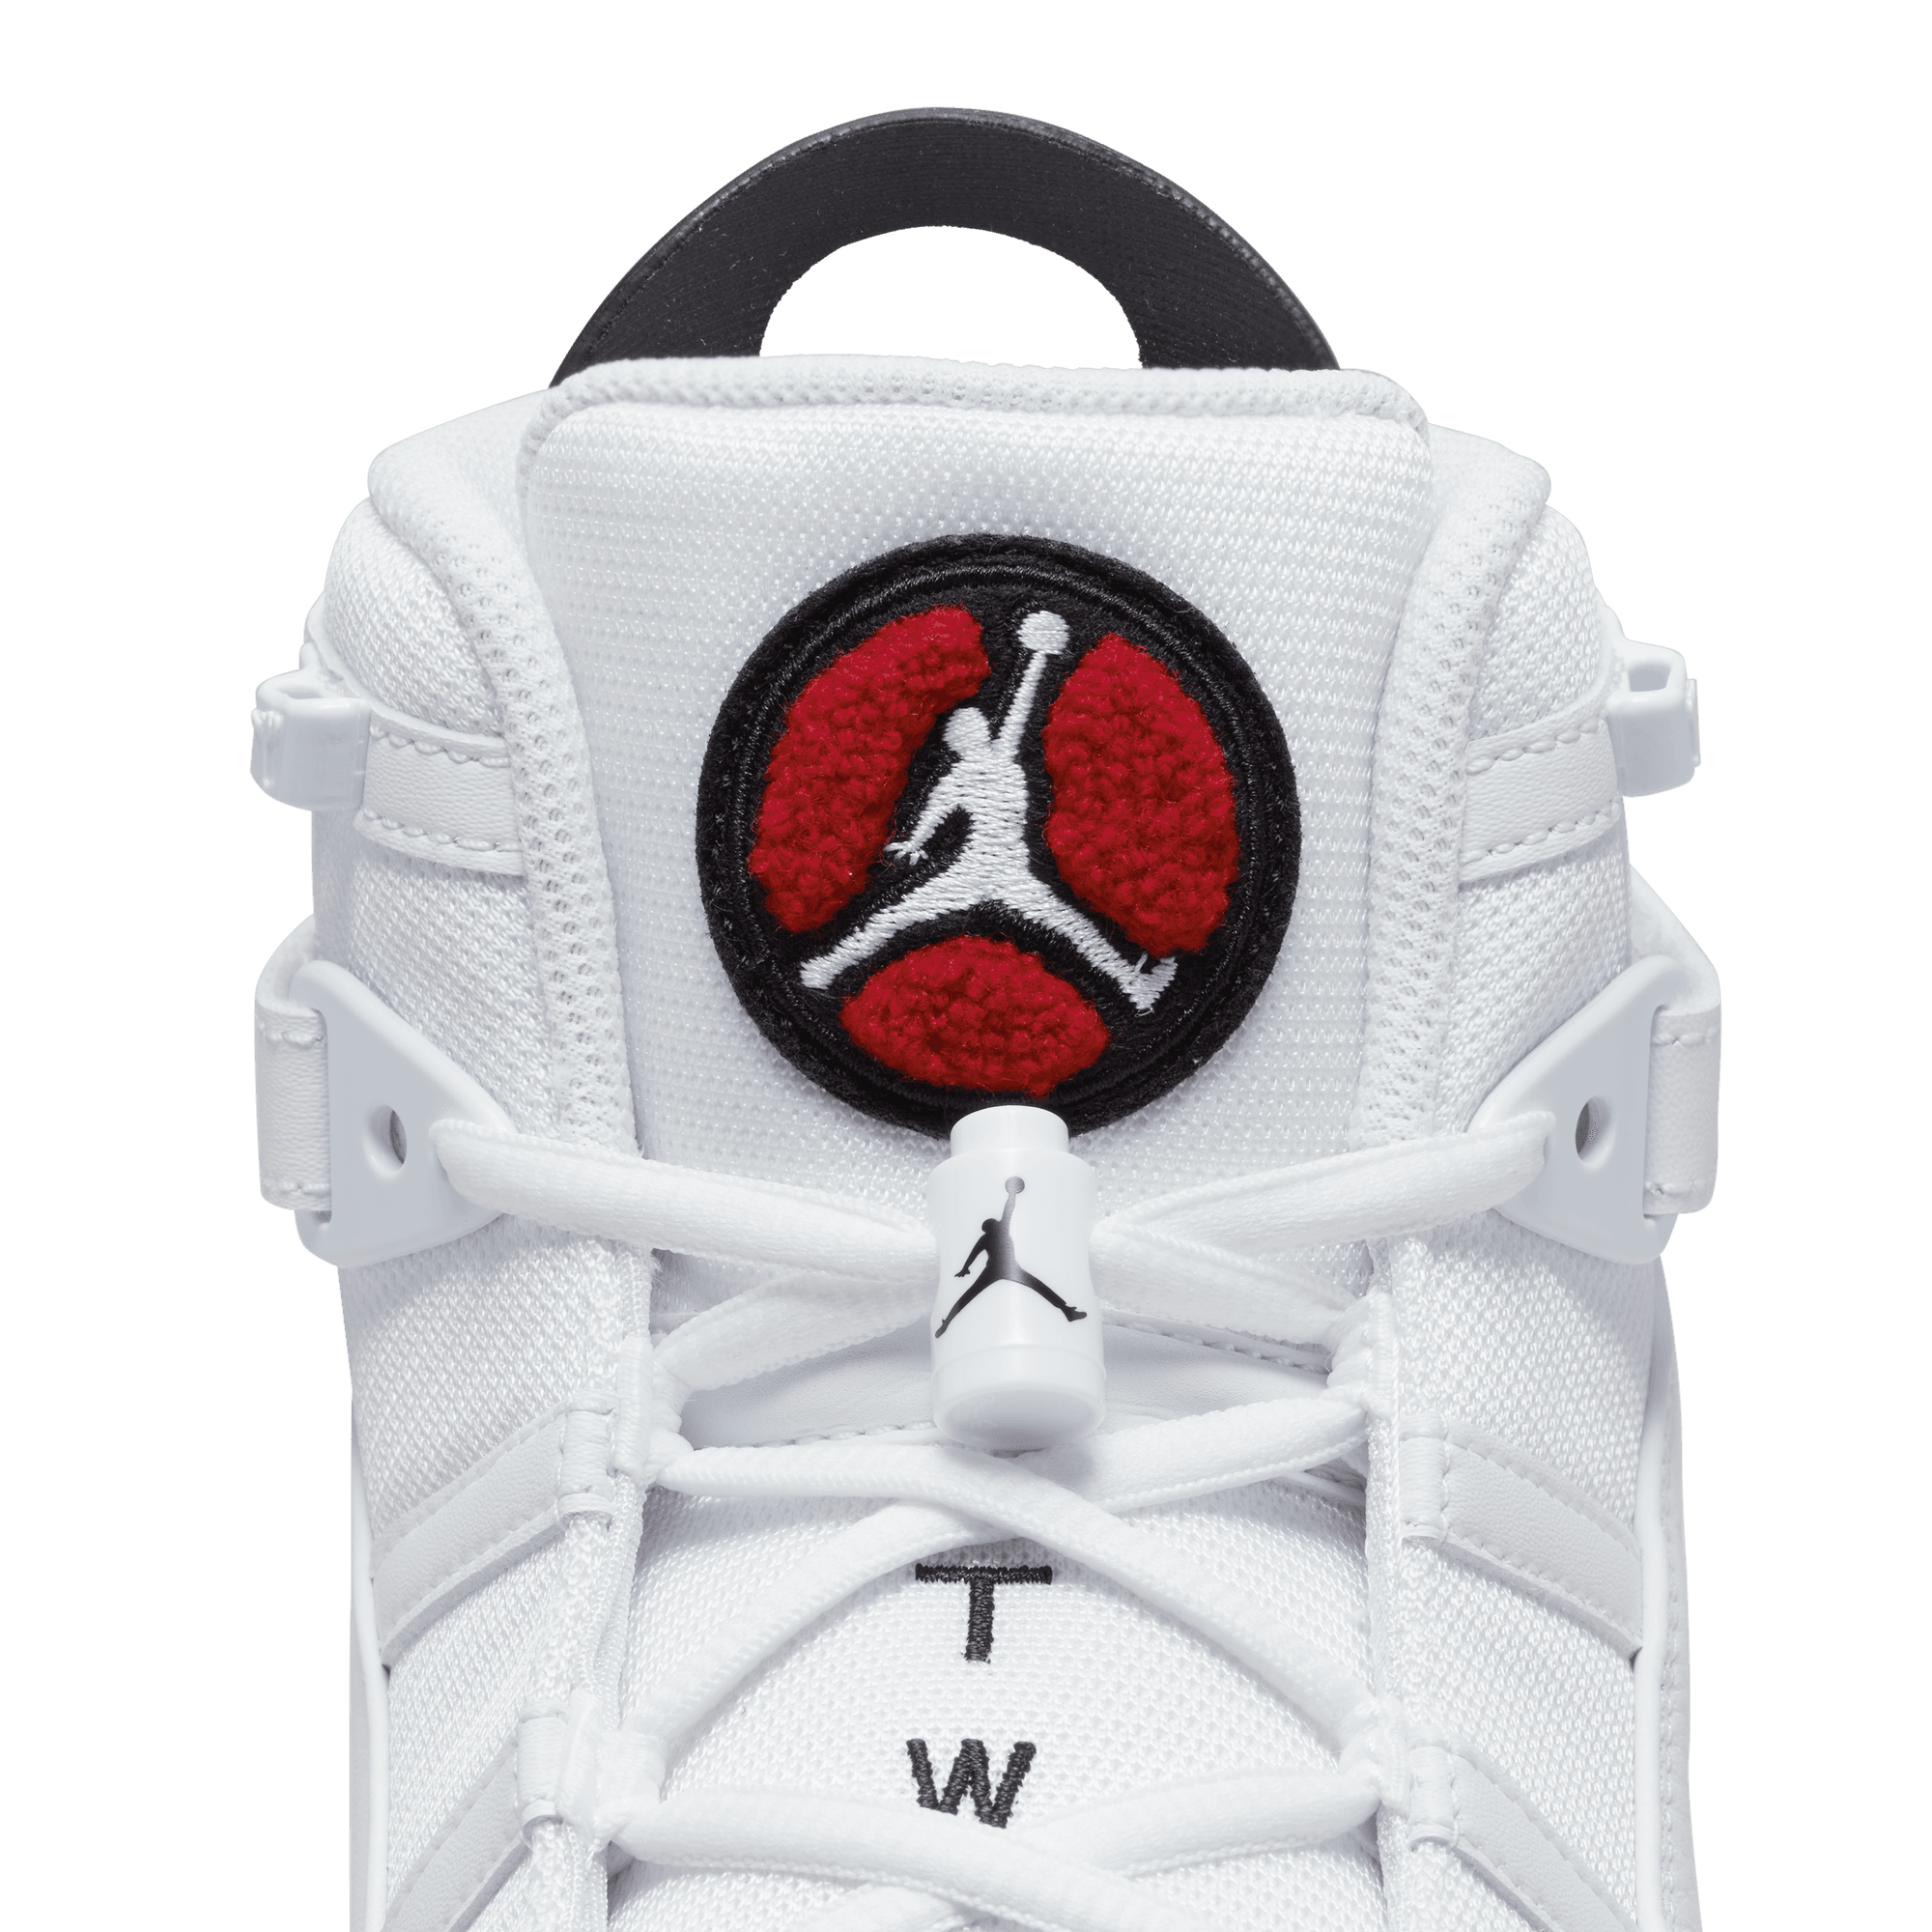 Air Jordan FOOTWEAR Air Jordan 6 Rings - Men's